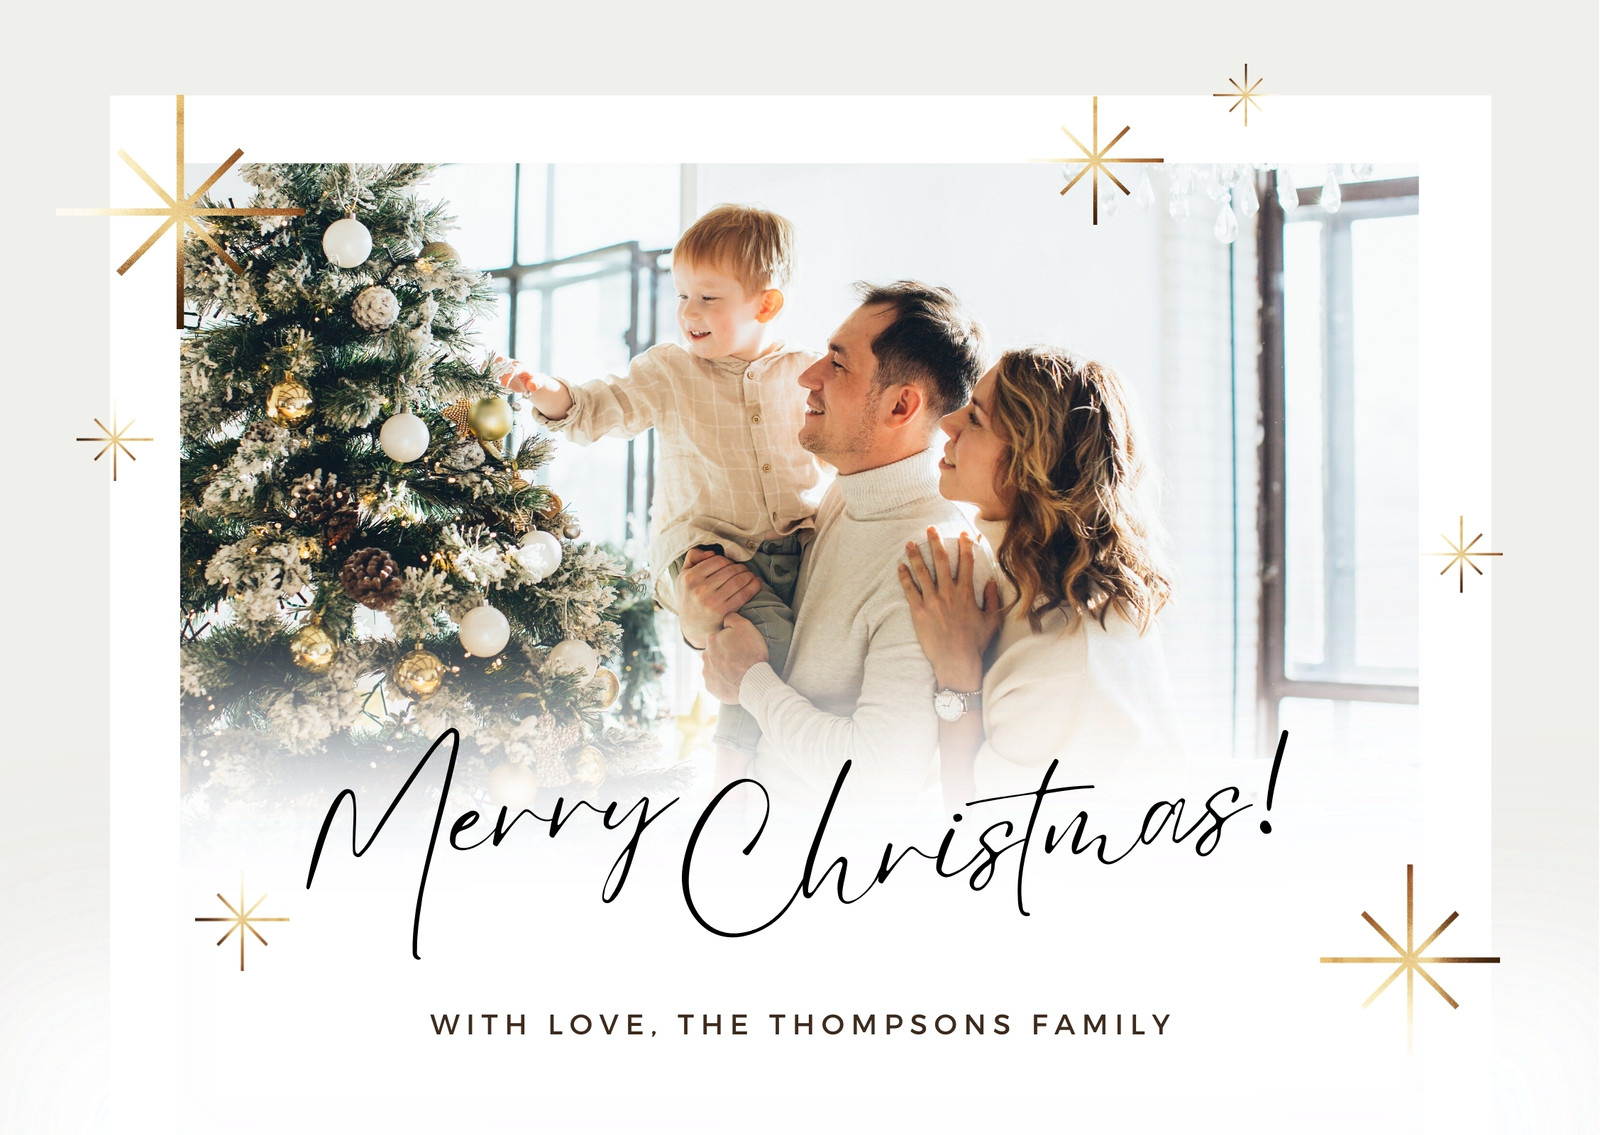 https://marketplace.canva.com/EAFTXEt1g-k/1/0/1600w/canva-beige-minimalist-holiday-family-photo-merry-christmas-card-4pziJVPkF8U.jpg